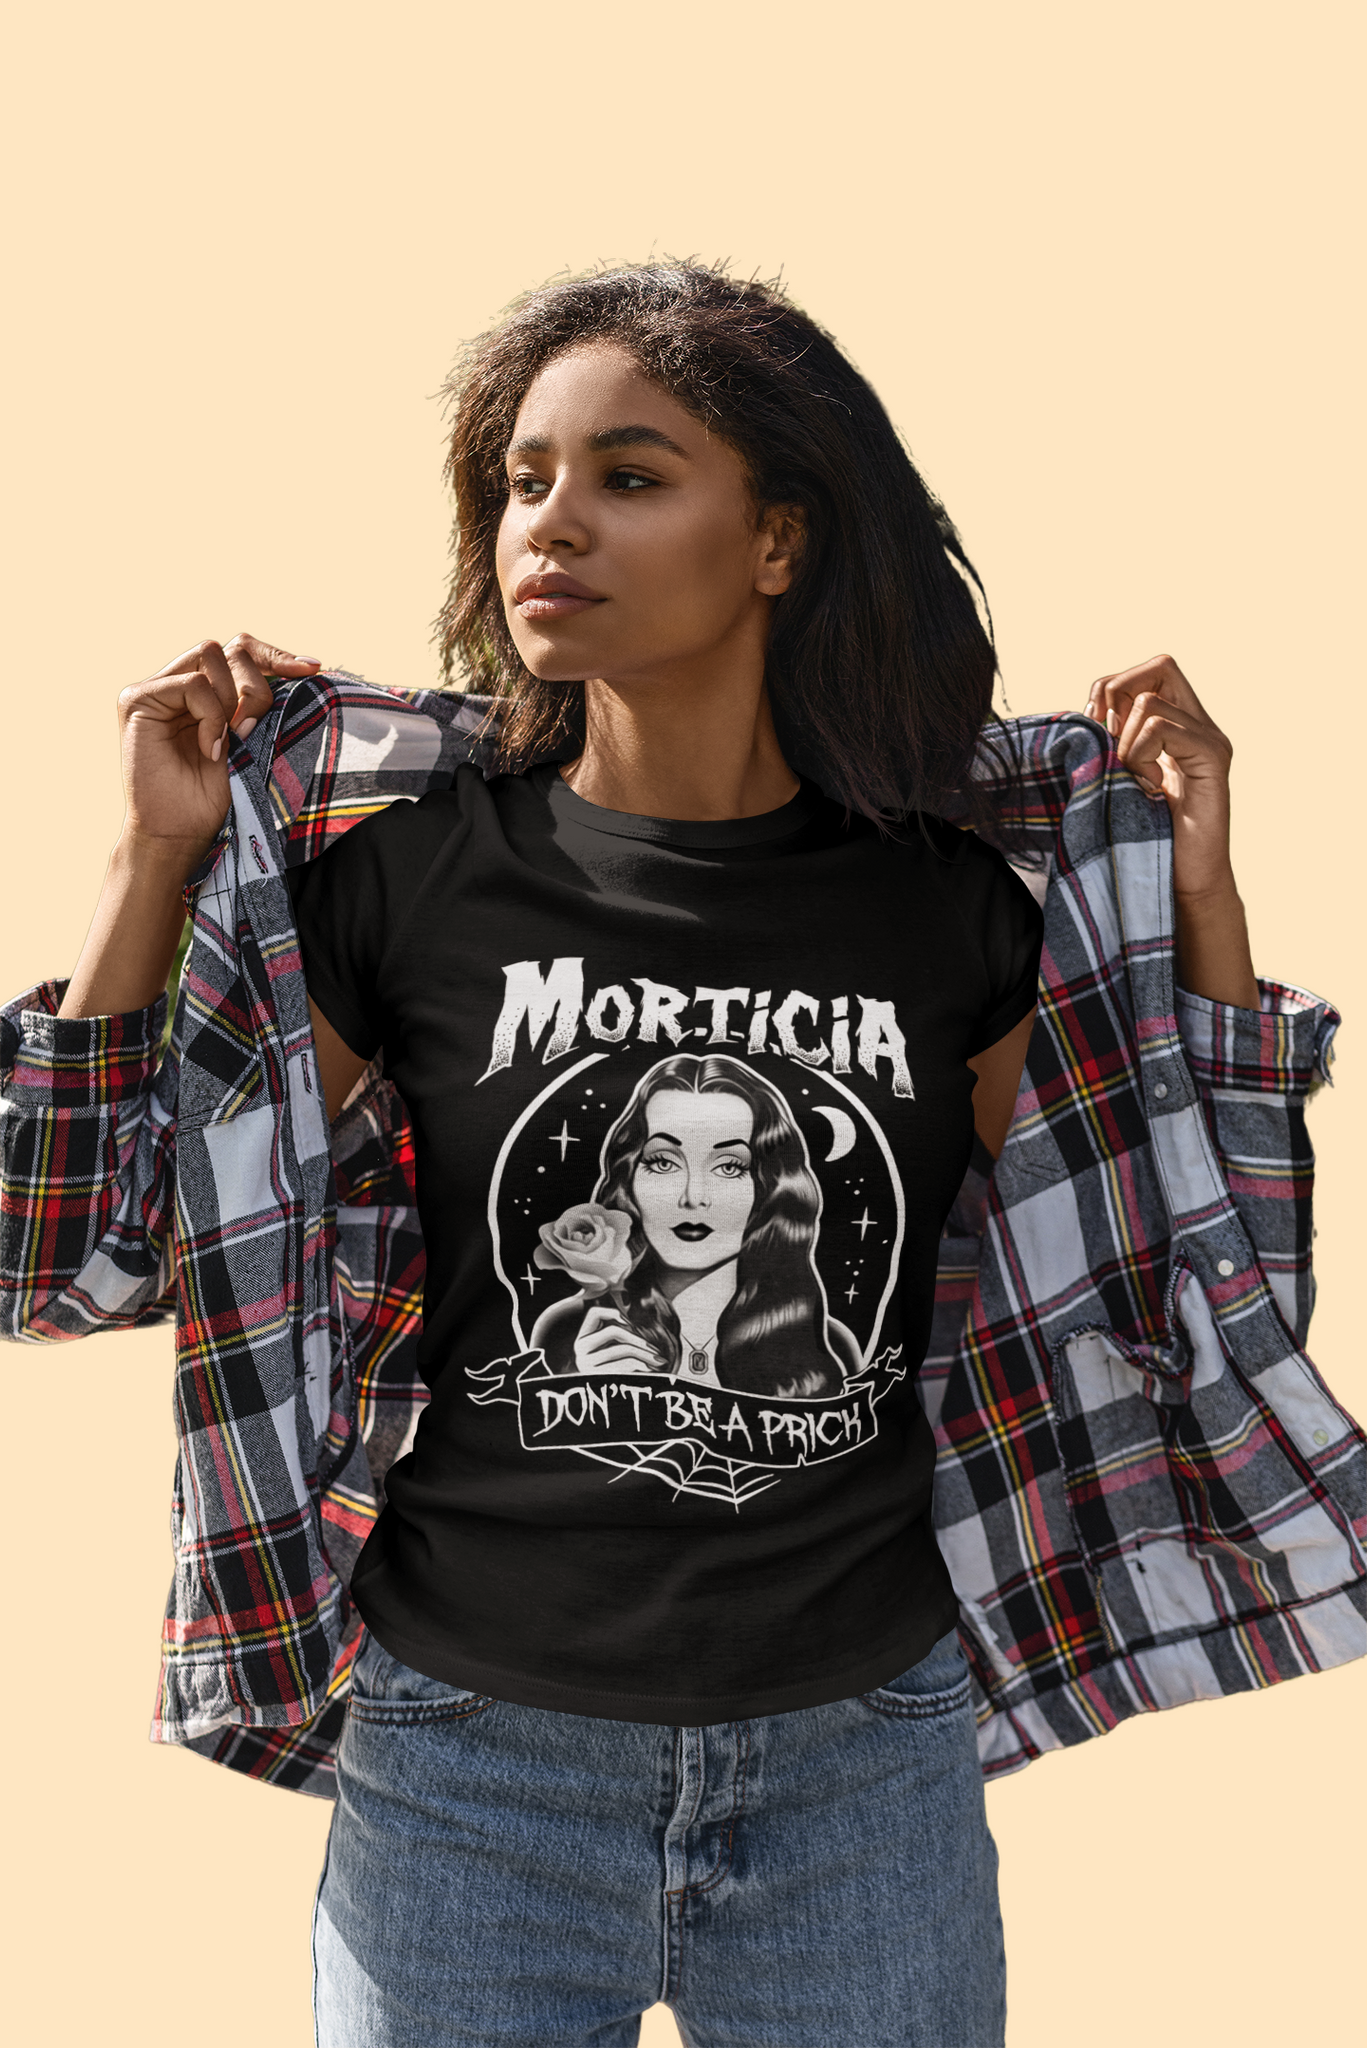 Addams Family T Shirt, Morticia Addams Tshirt, Morticia Dont Be A Prick Shirt, Halloween Gifts